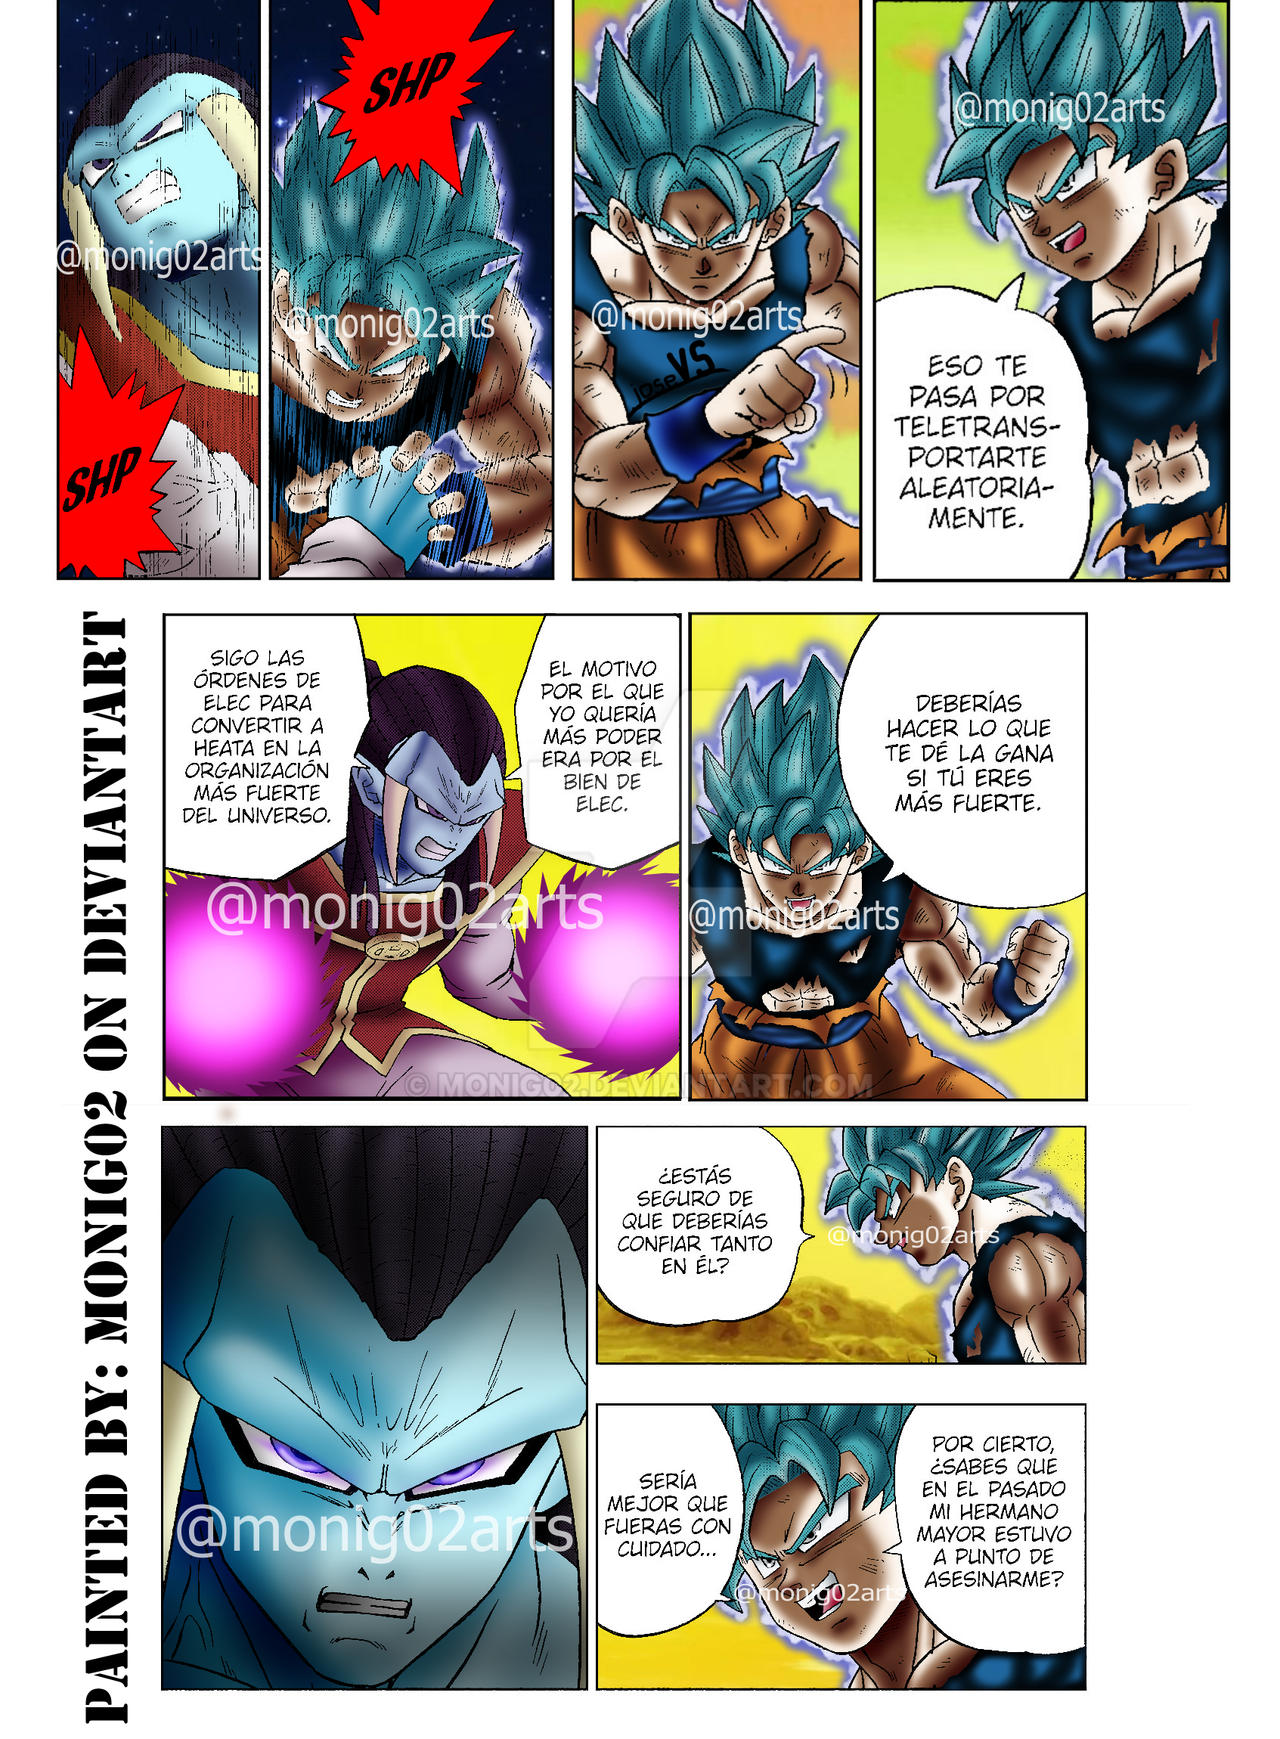 Goku SSBUI Vs Gas Part 1 DBS manga 82 by MoniG02 by MoniG02 on DeviantArt